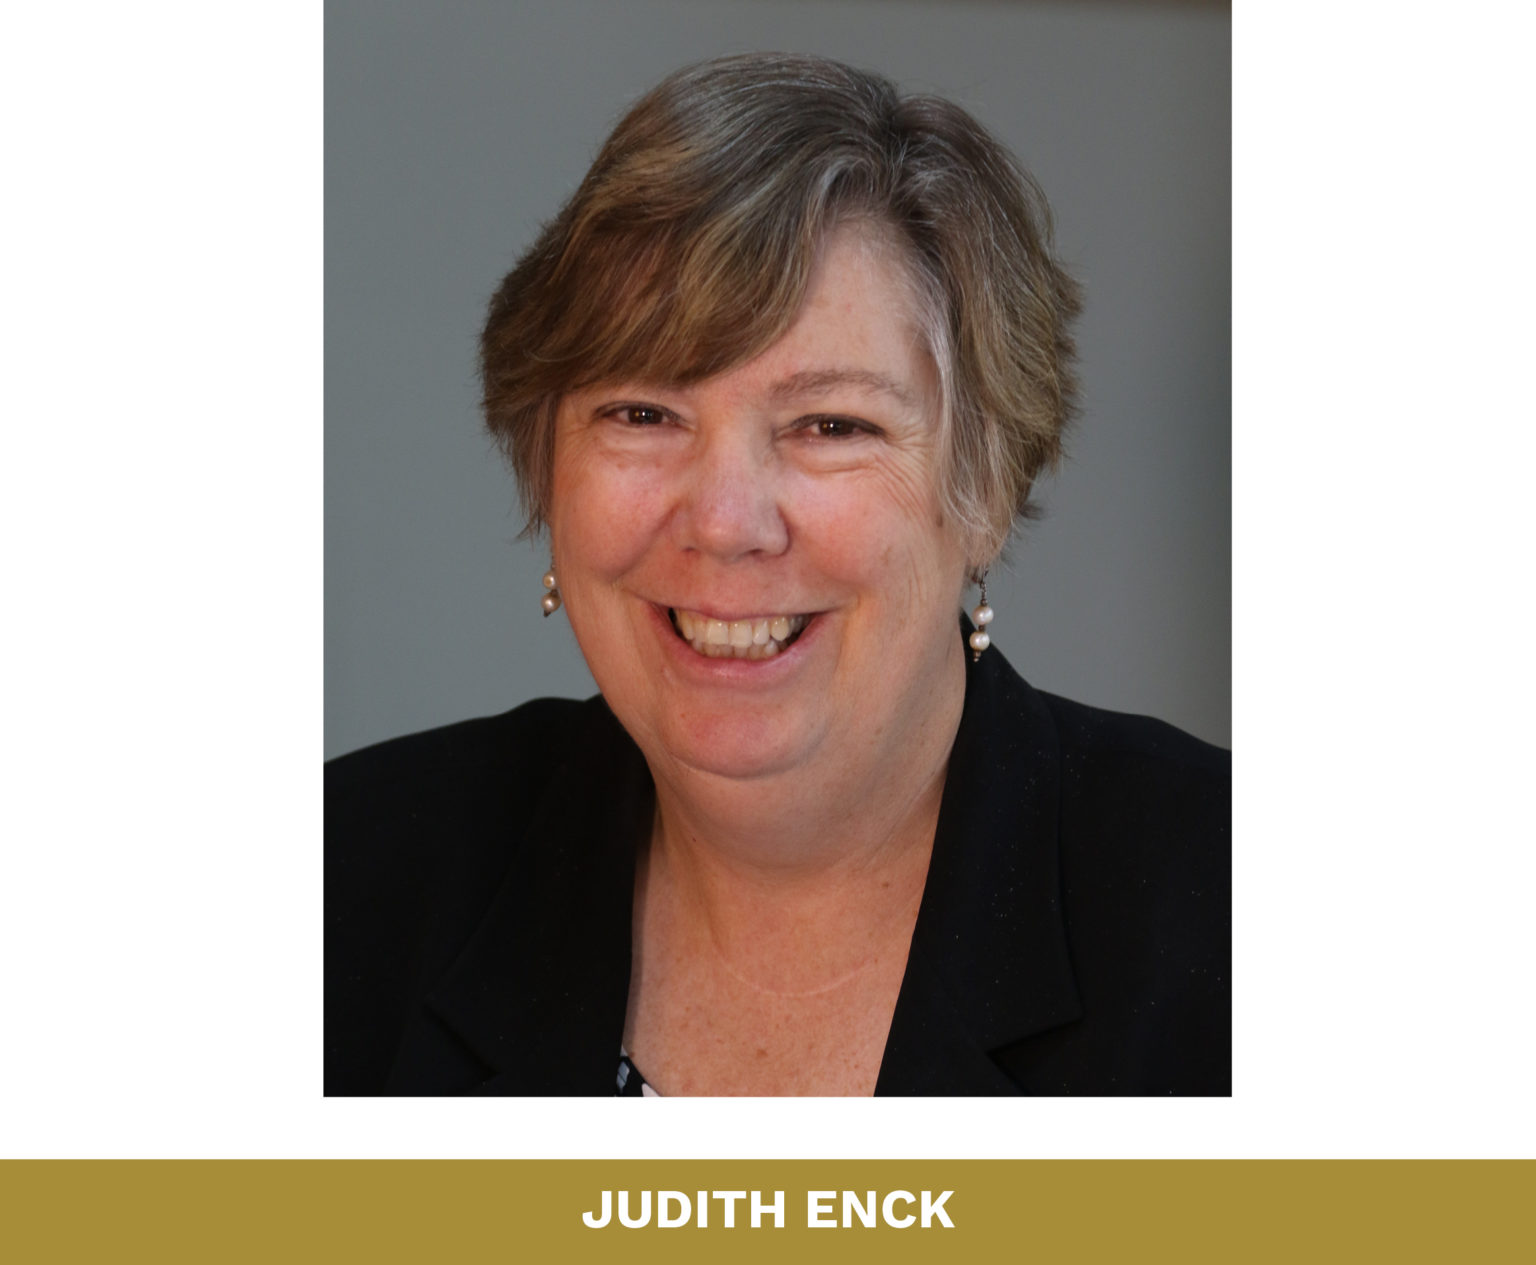 Judith Enck